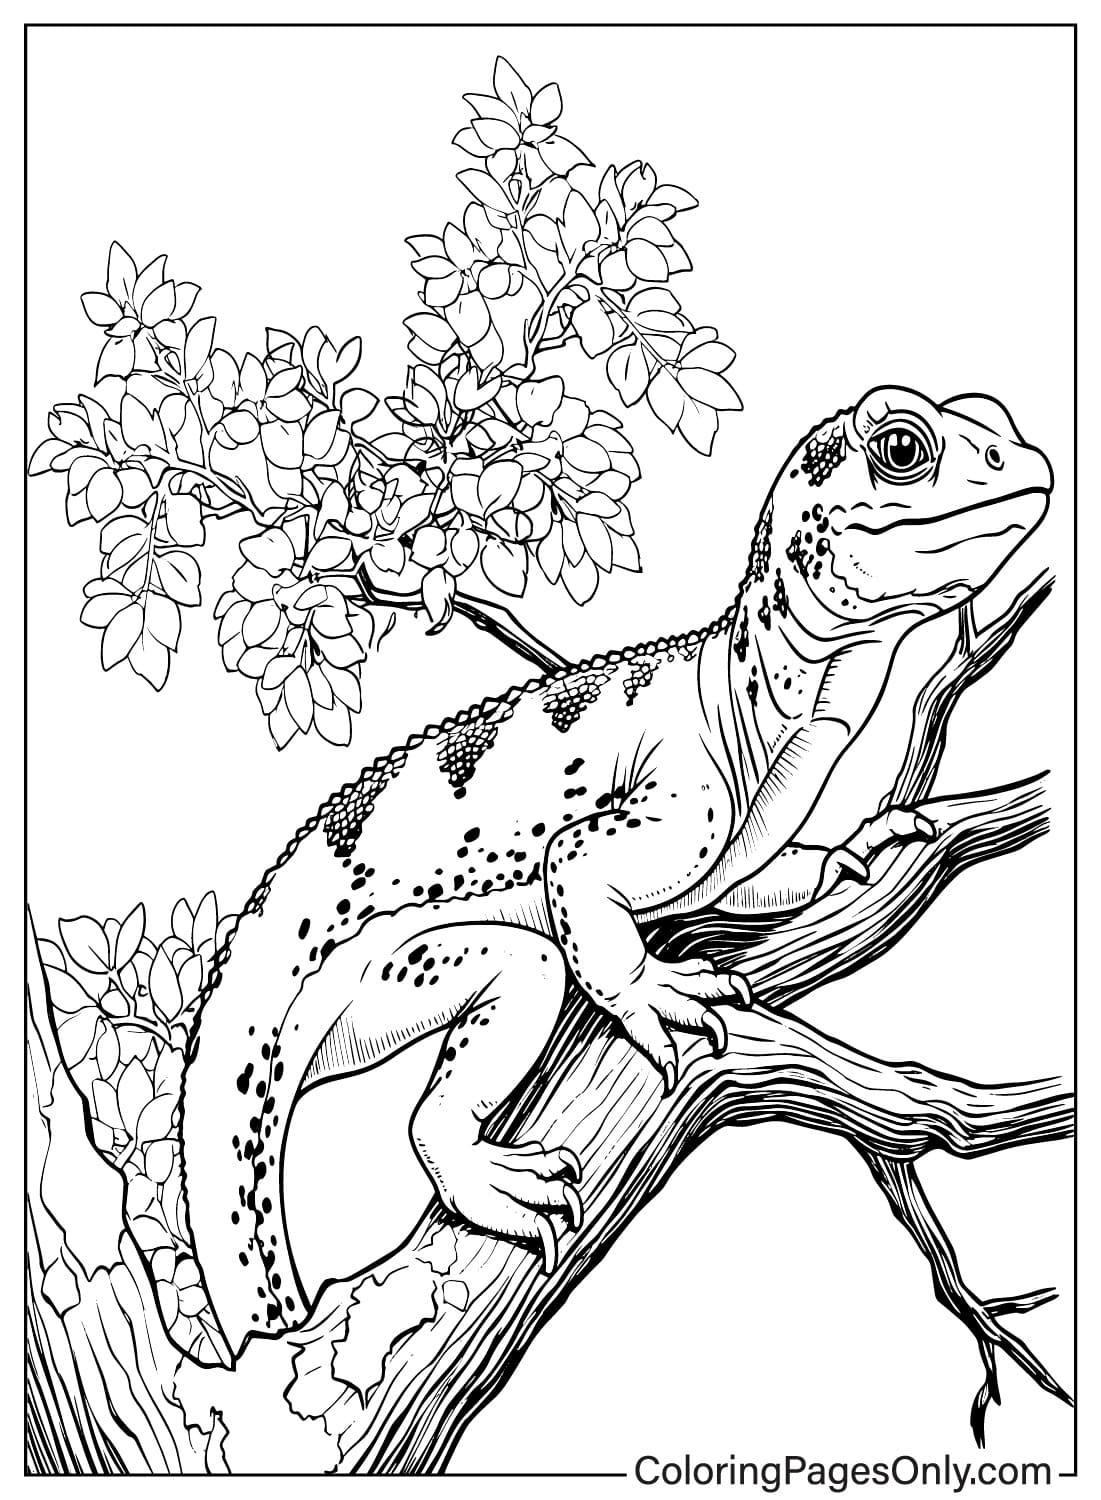 Página para colorir para impressão gratuita de lagarto